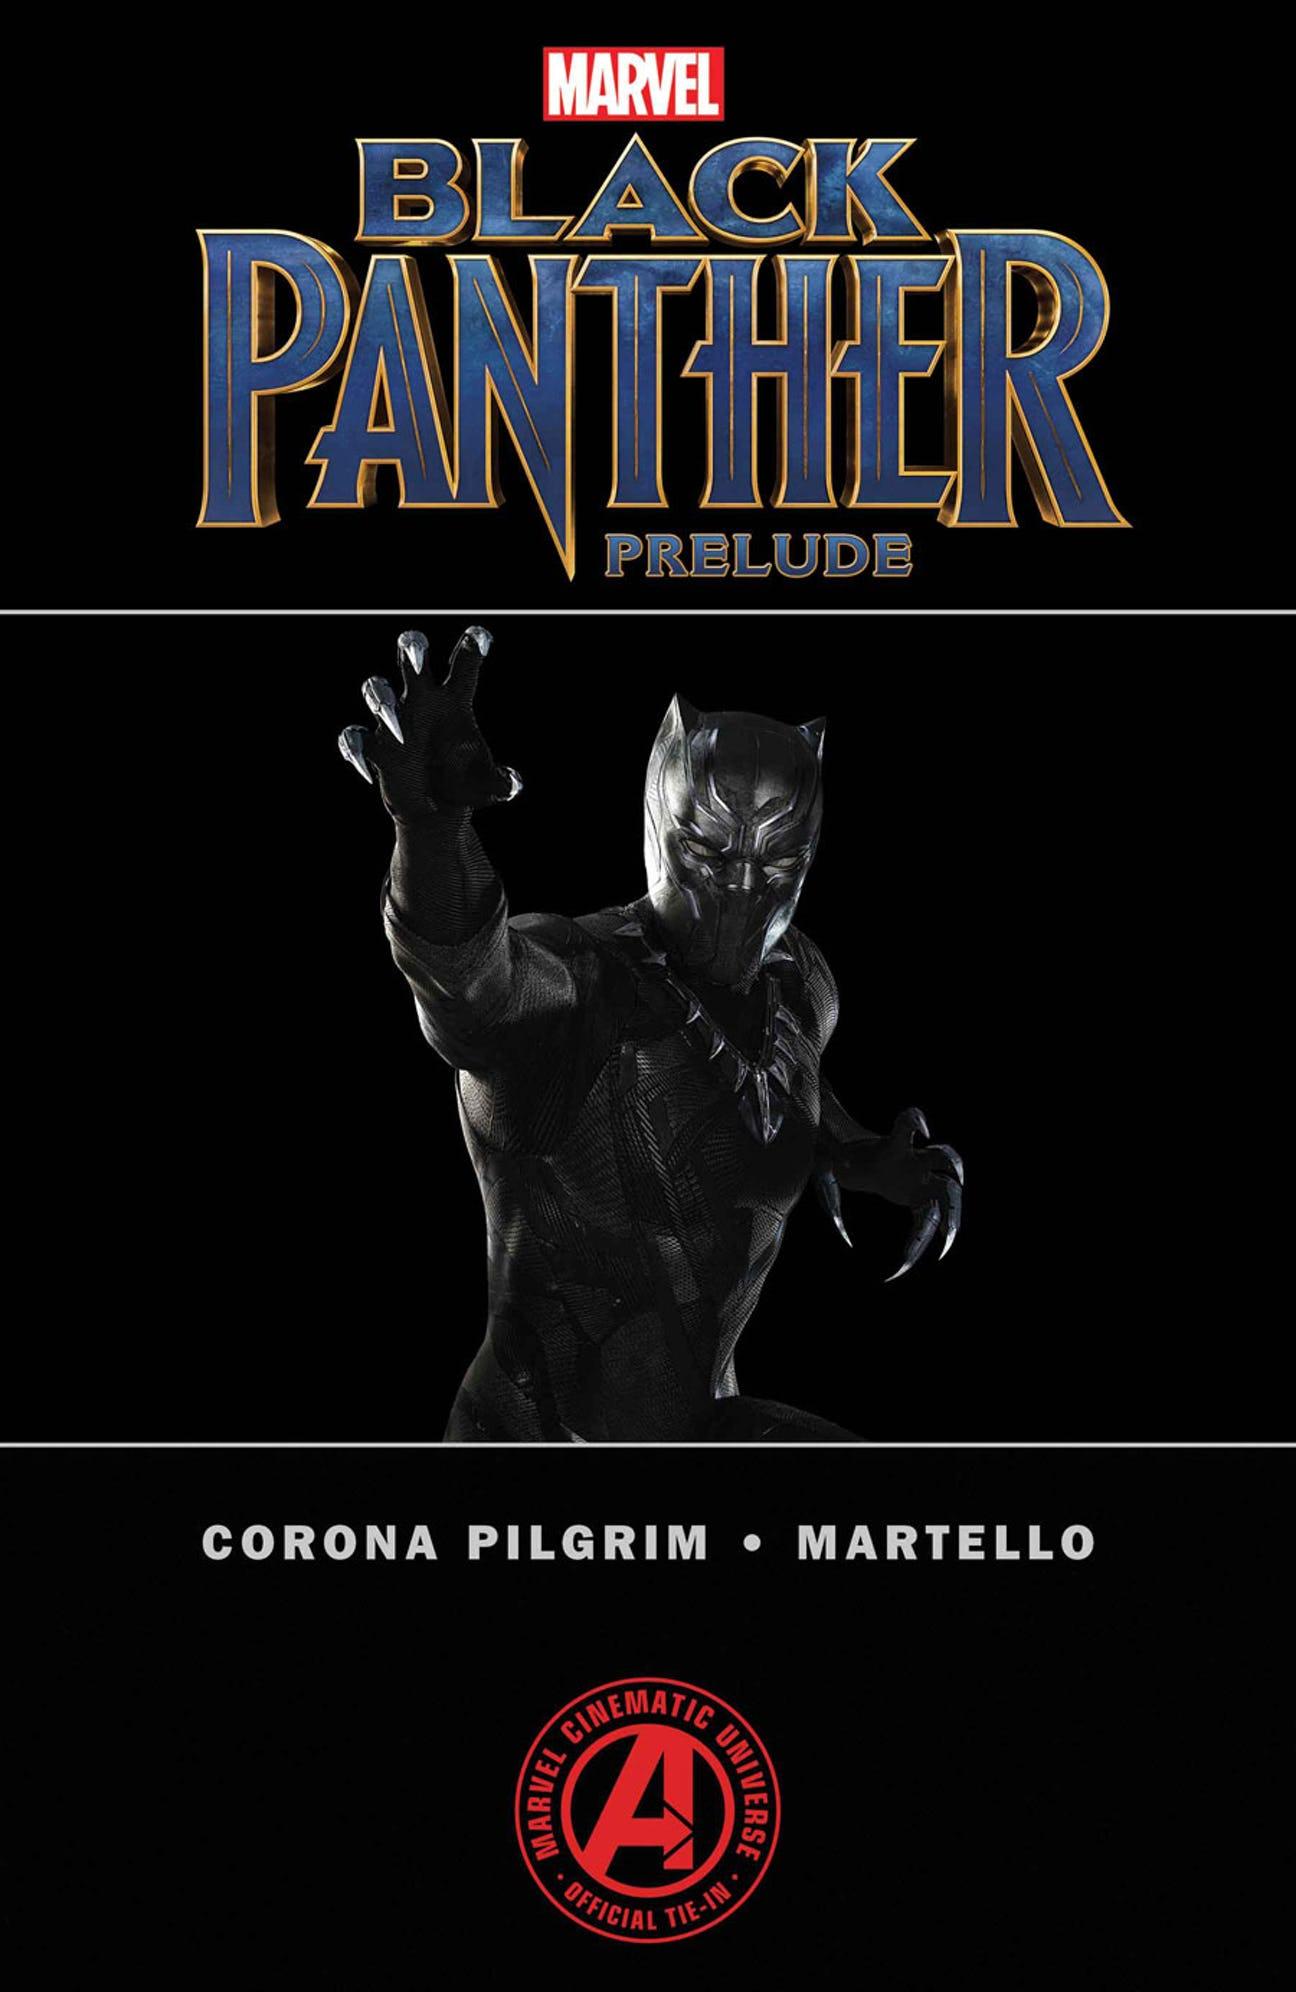 Marvel's Black Panther Prelude Vol. 1 #1